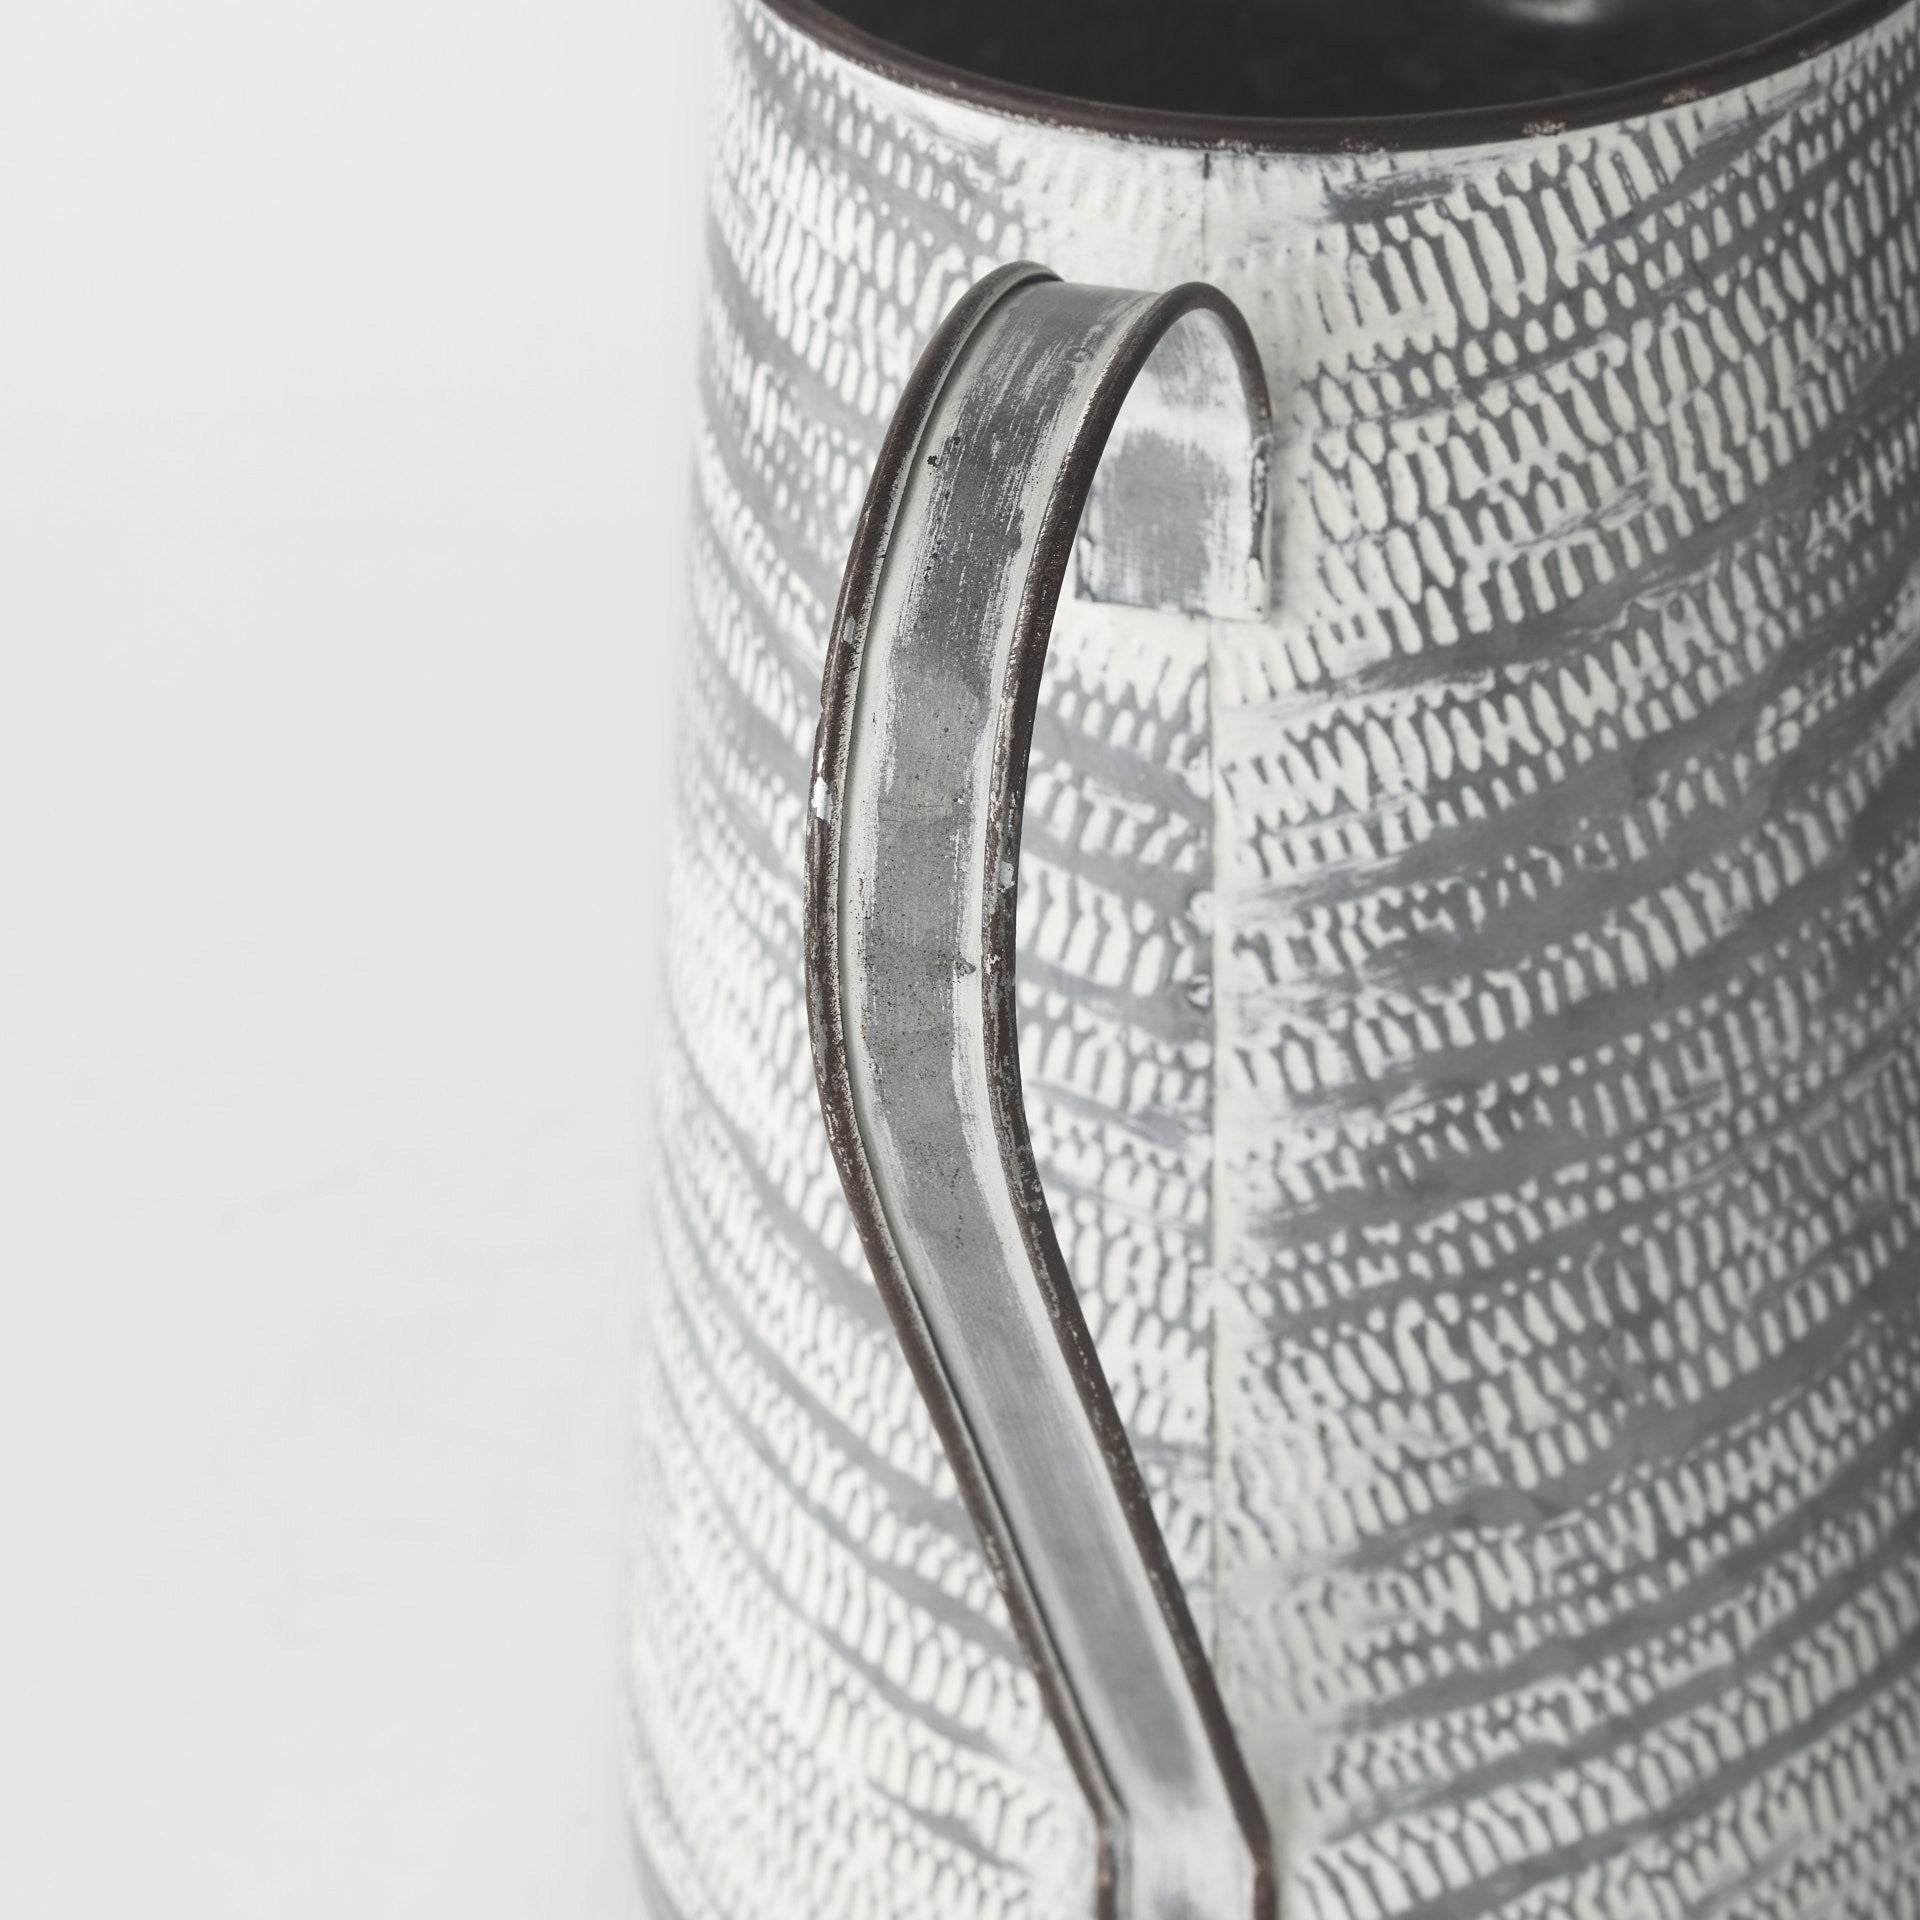 11" Metal Gray and White Cylinder Jug Vase